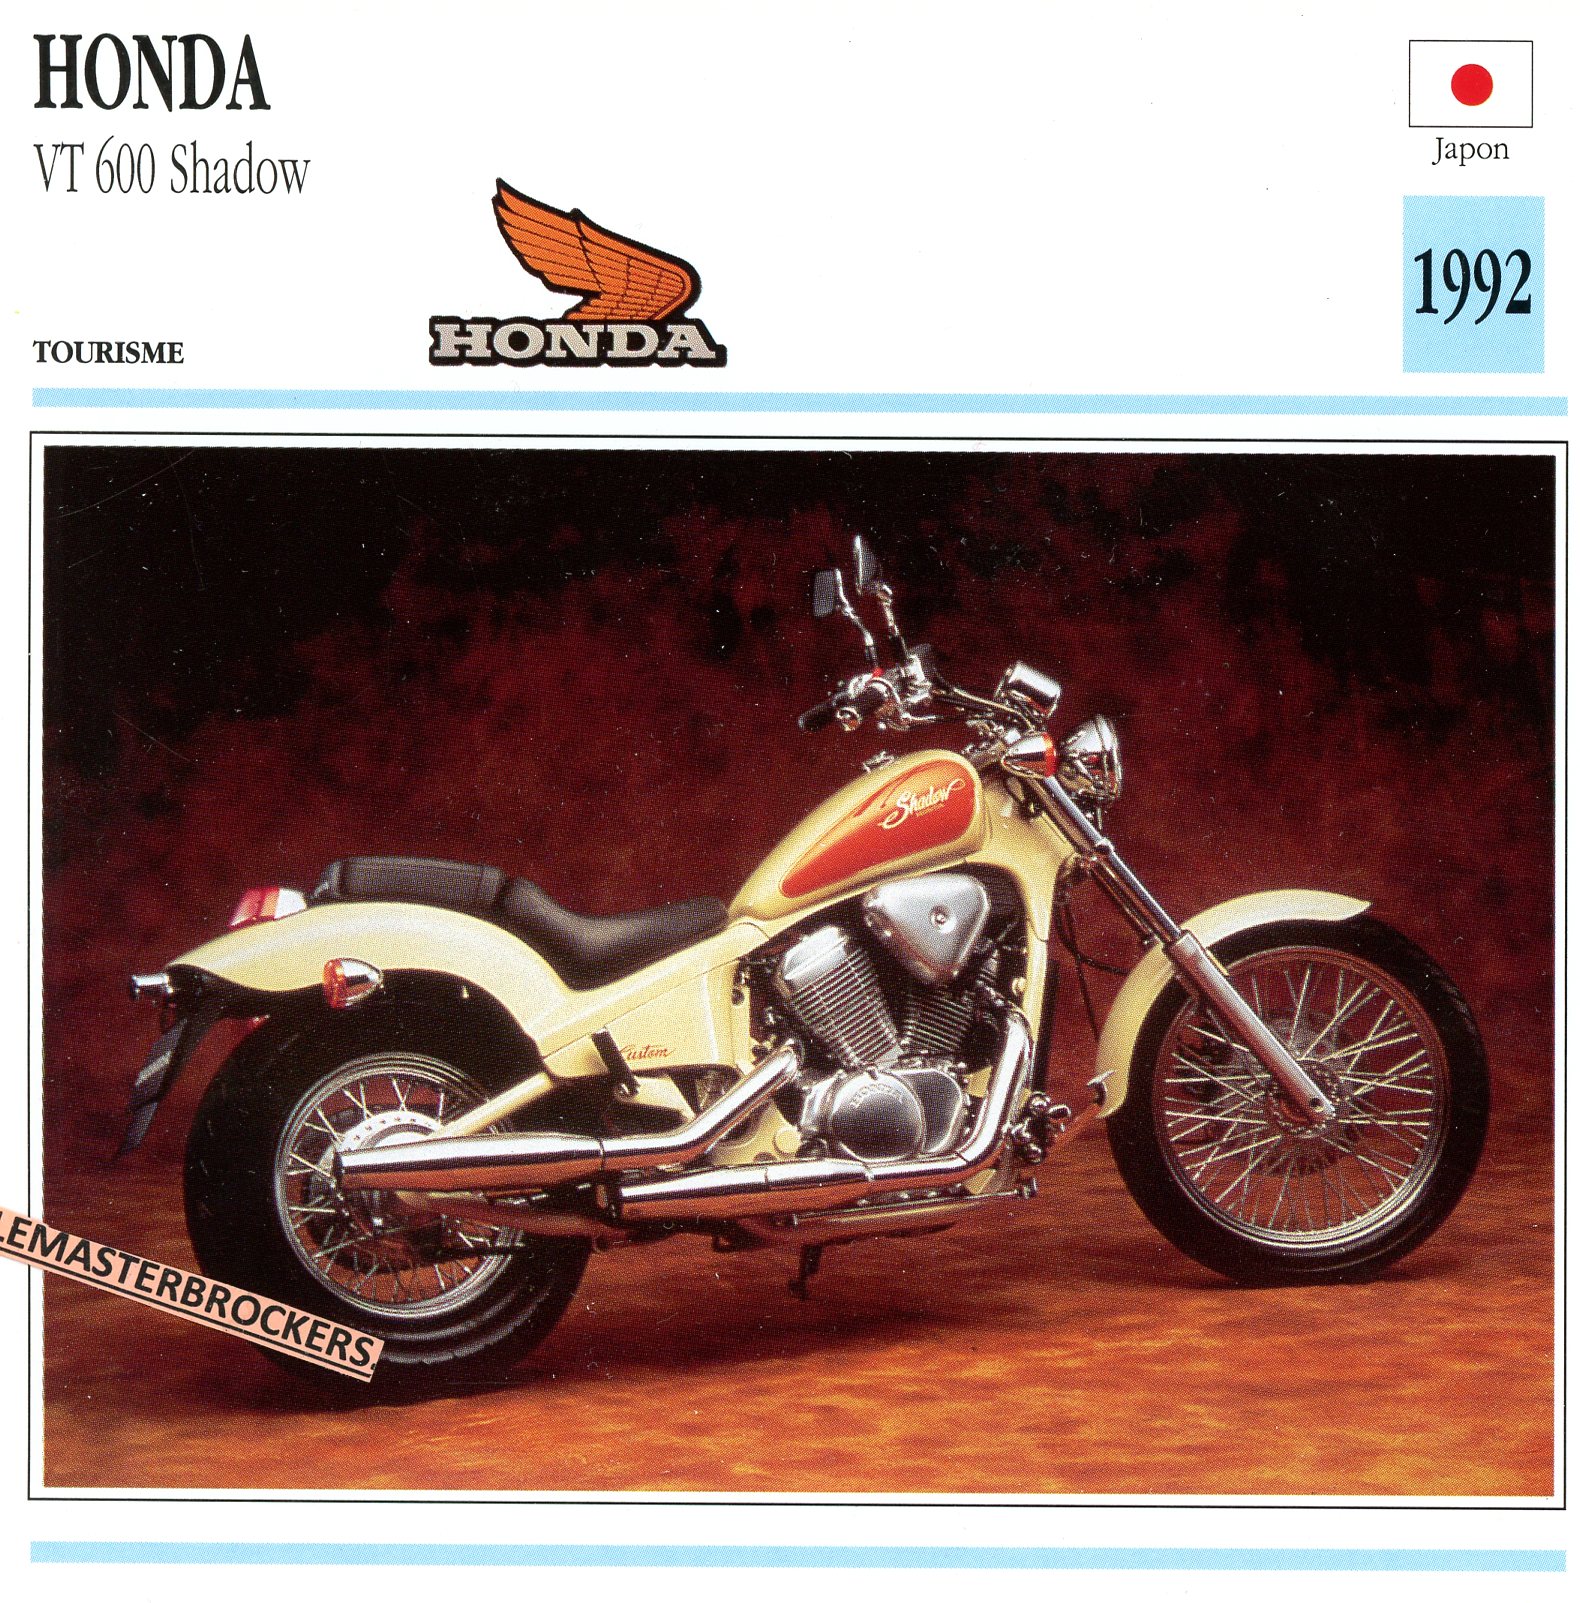 FICHE-MOTO-HONDA-VT600-SHADOW-1992-LEMASTERBROCKERS-CARS-MOTORCYCLE